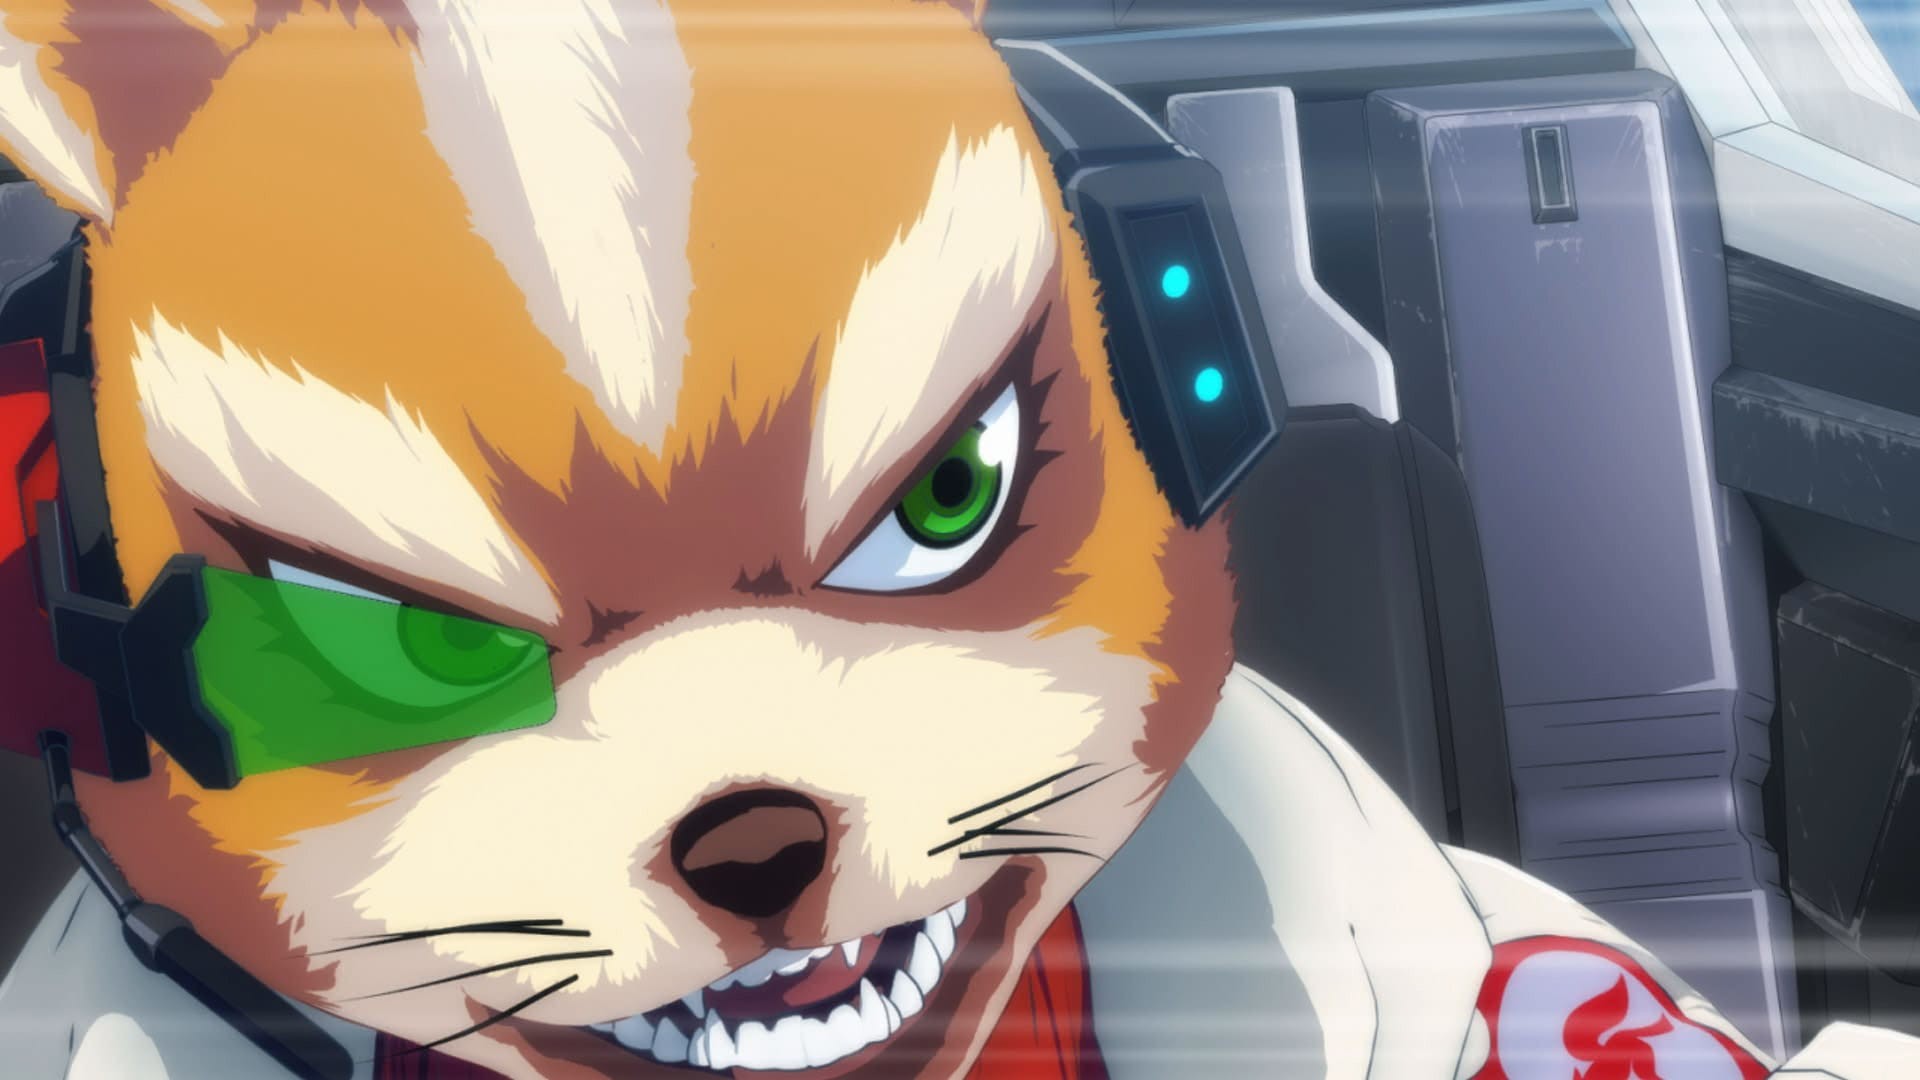 Fox in his cockpit